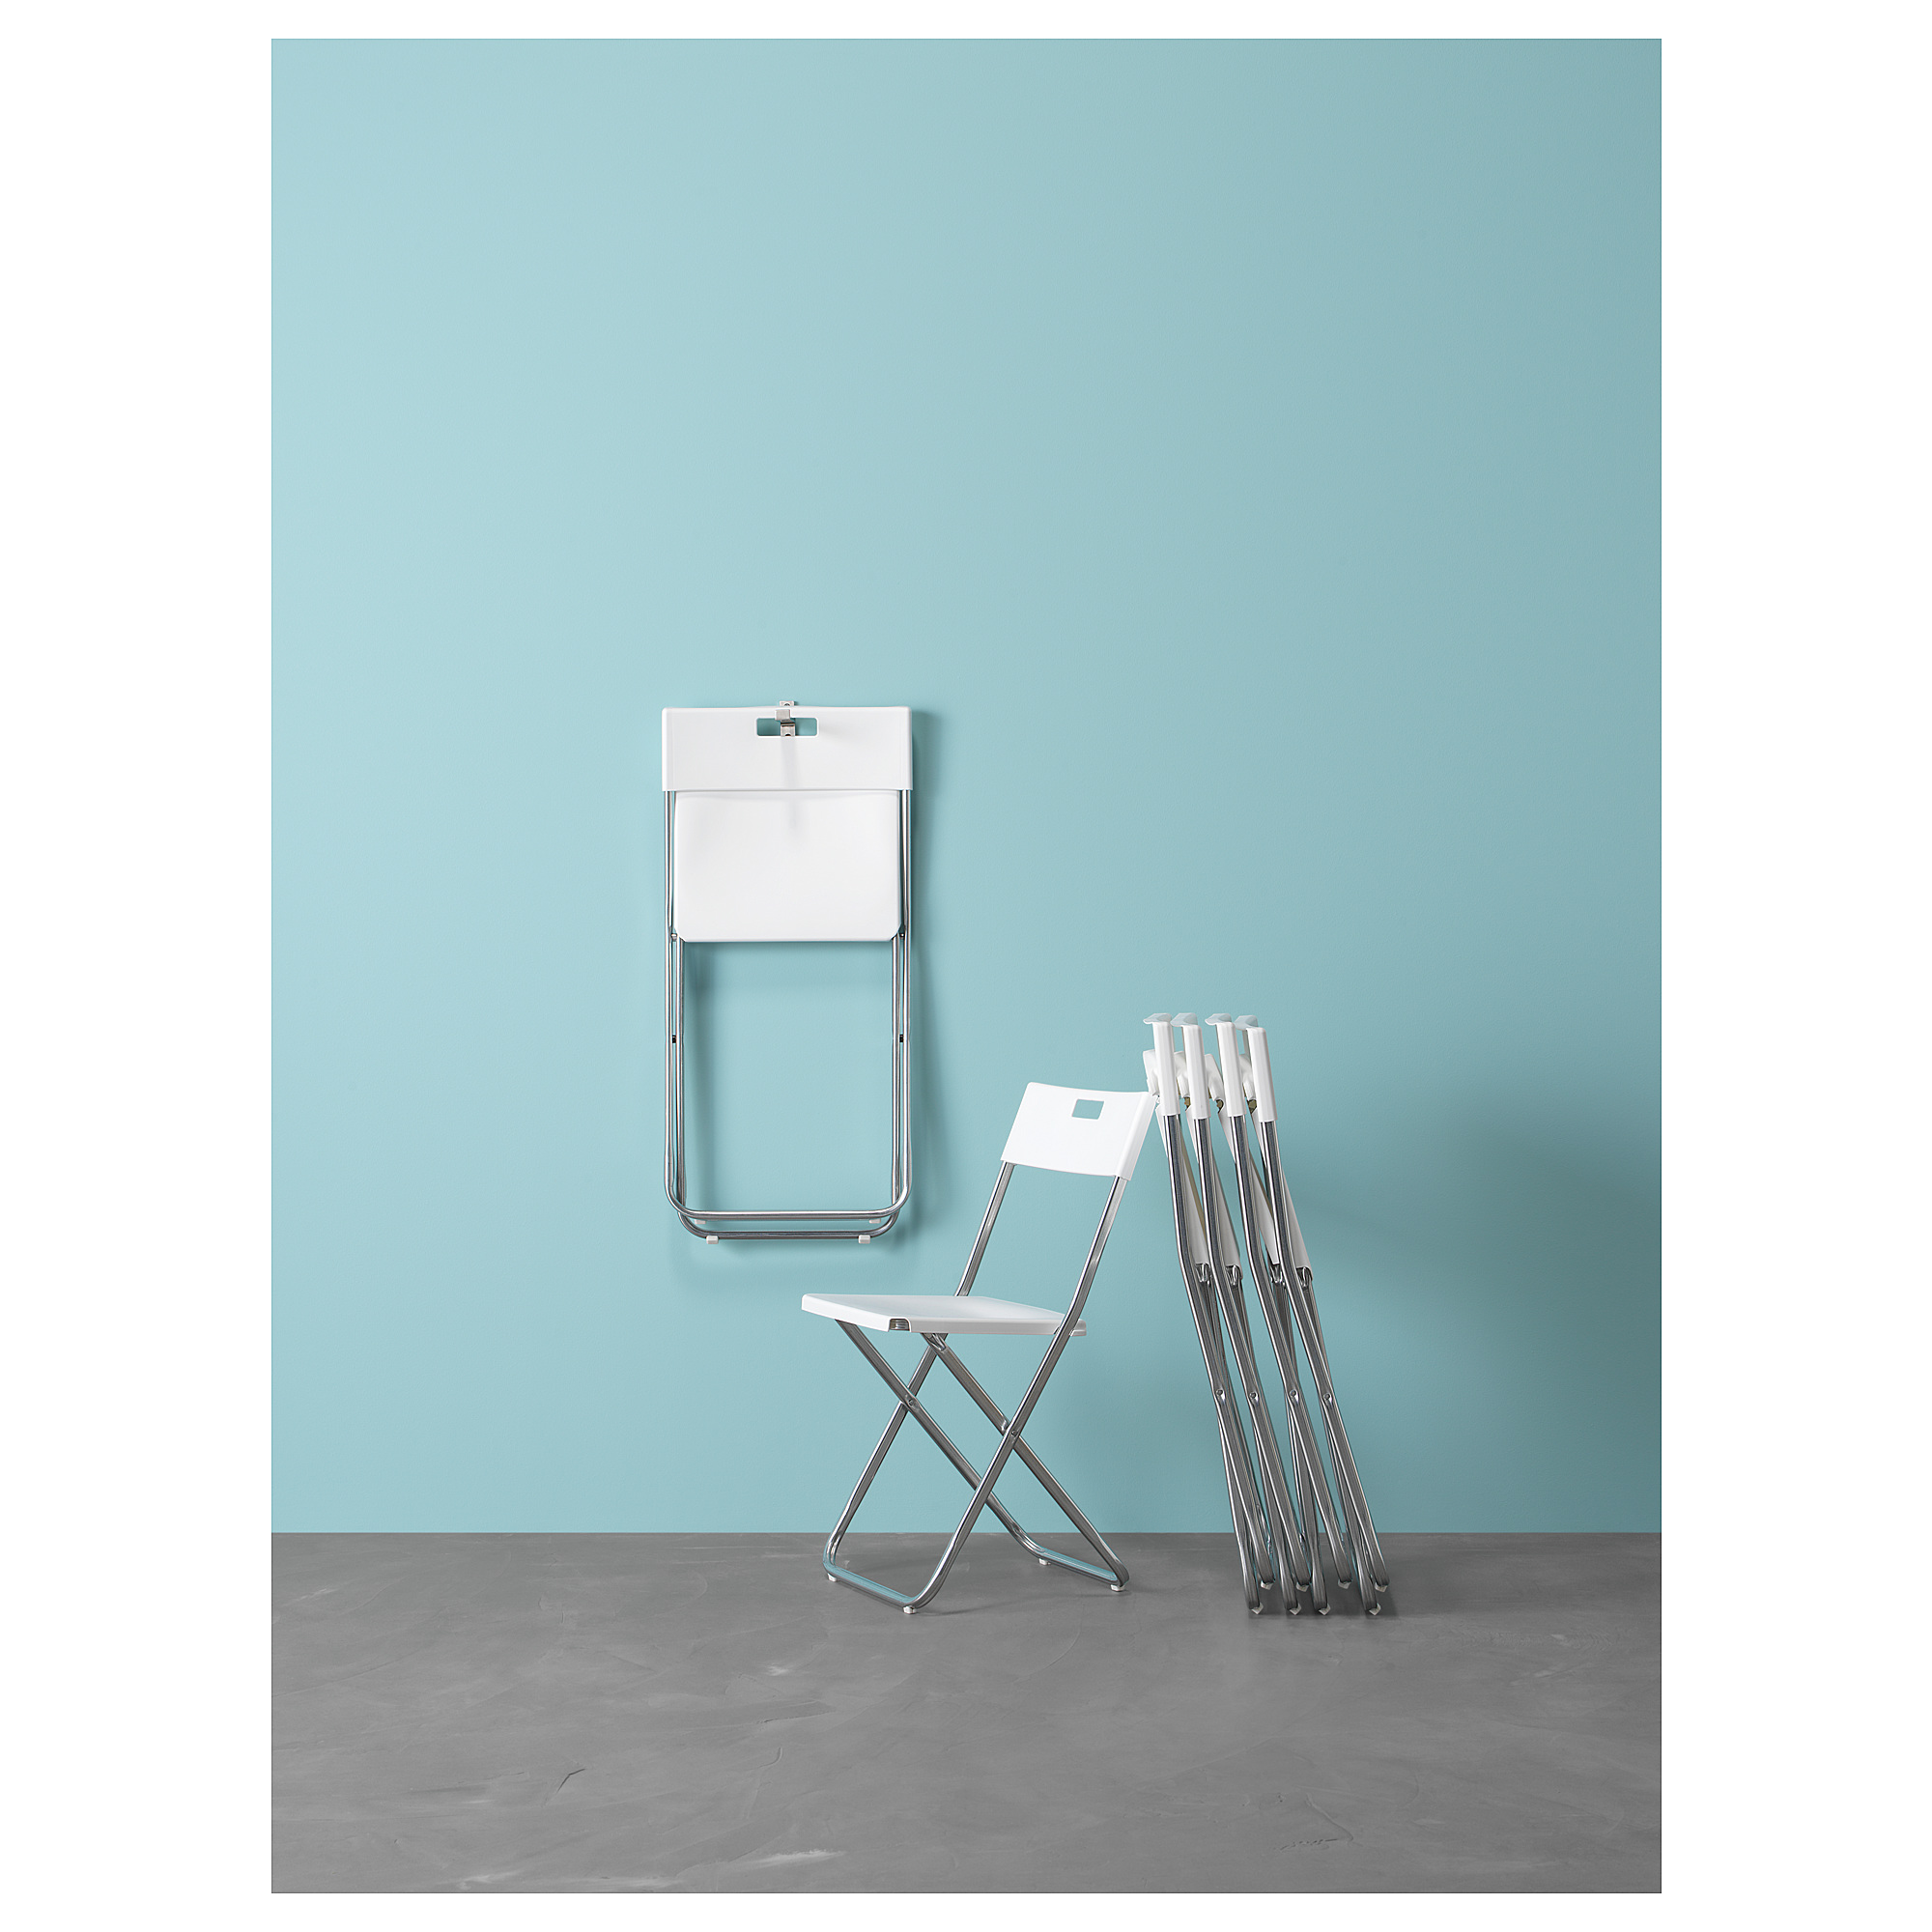 GUNDE folding chair